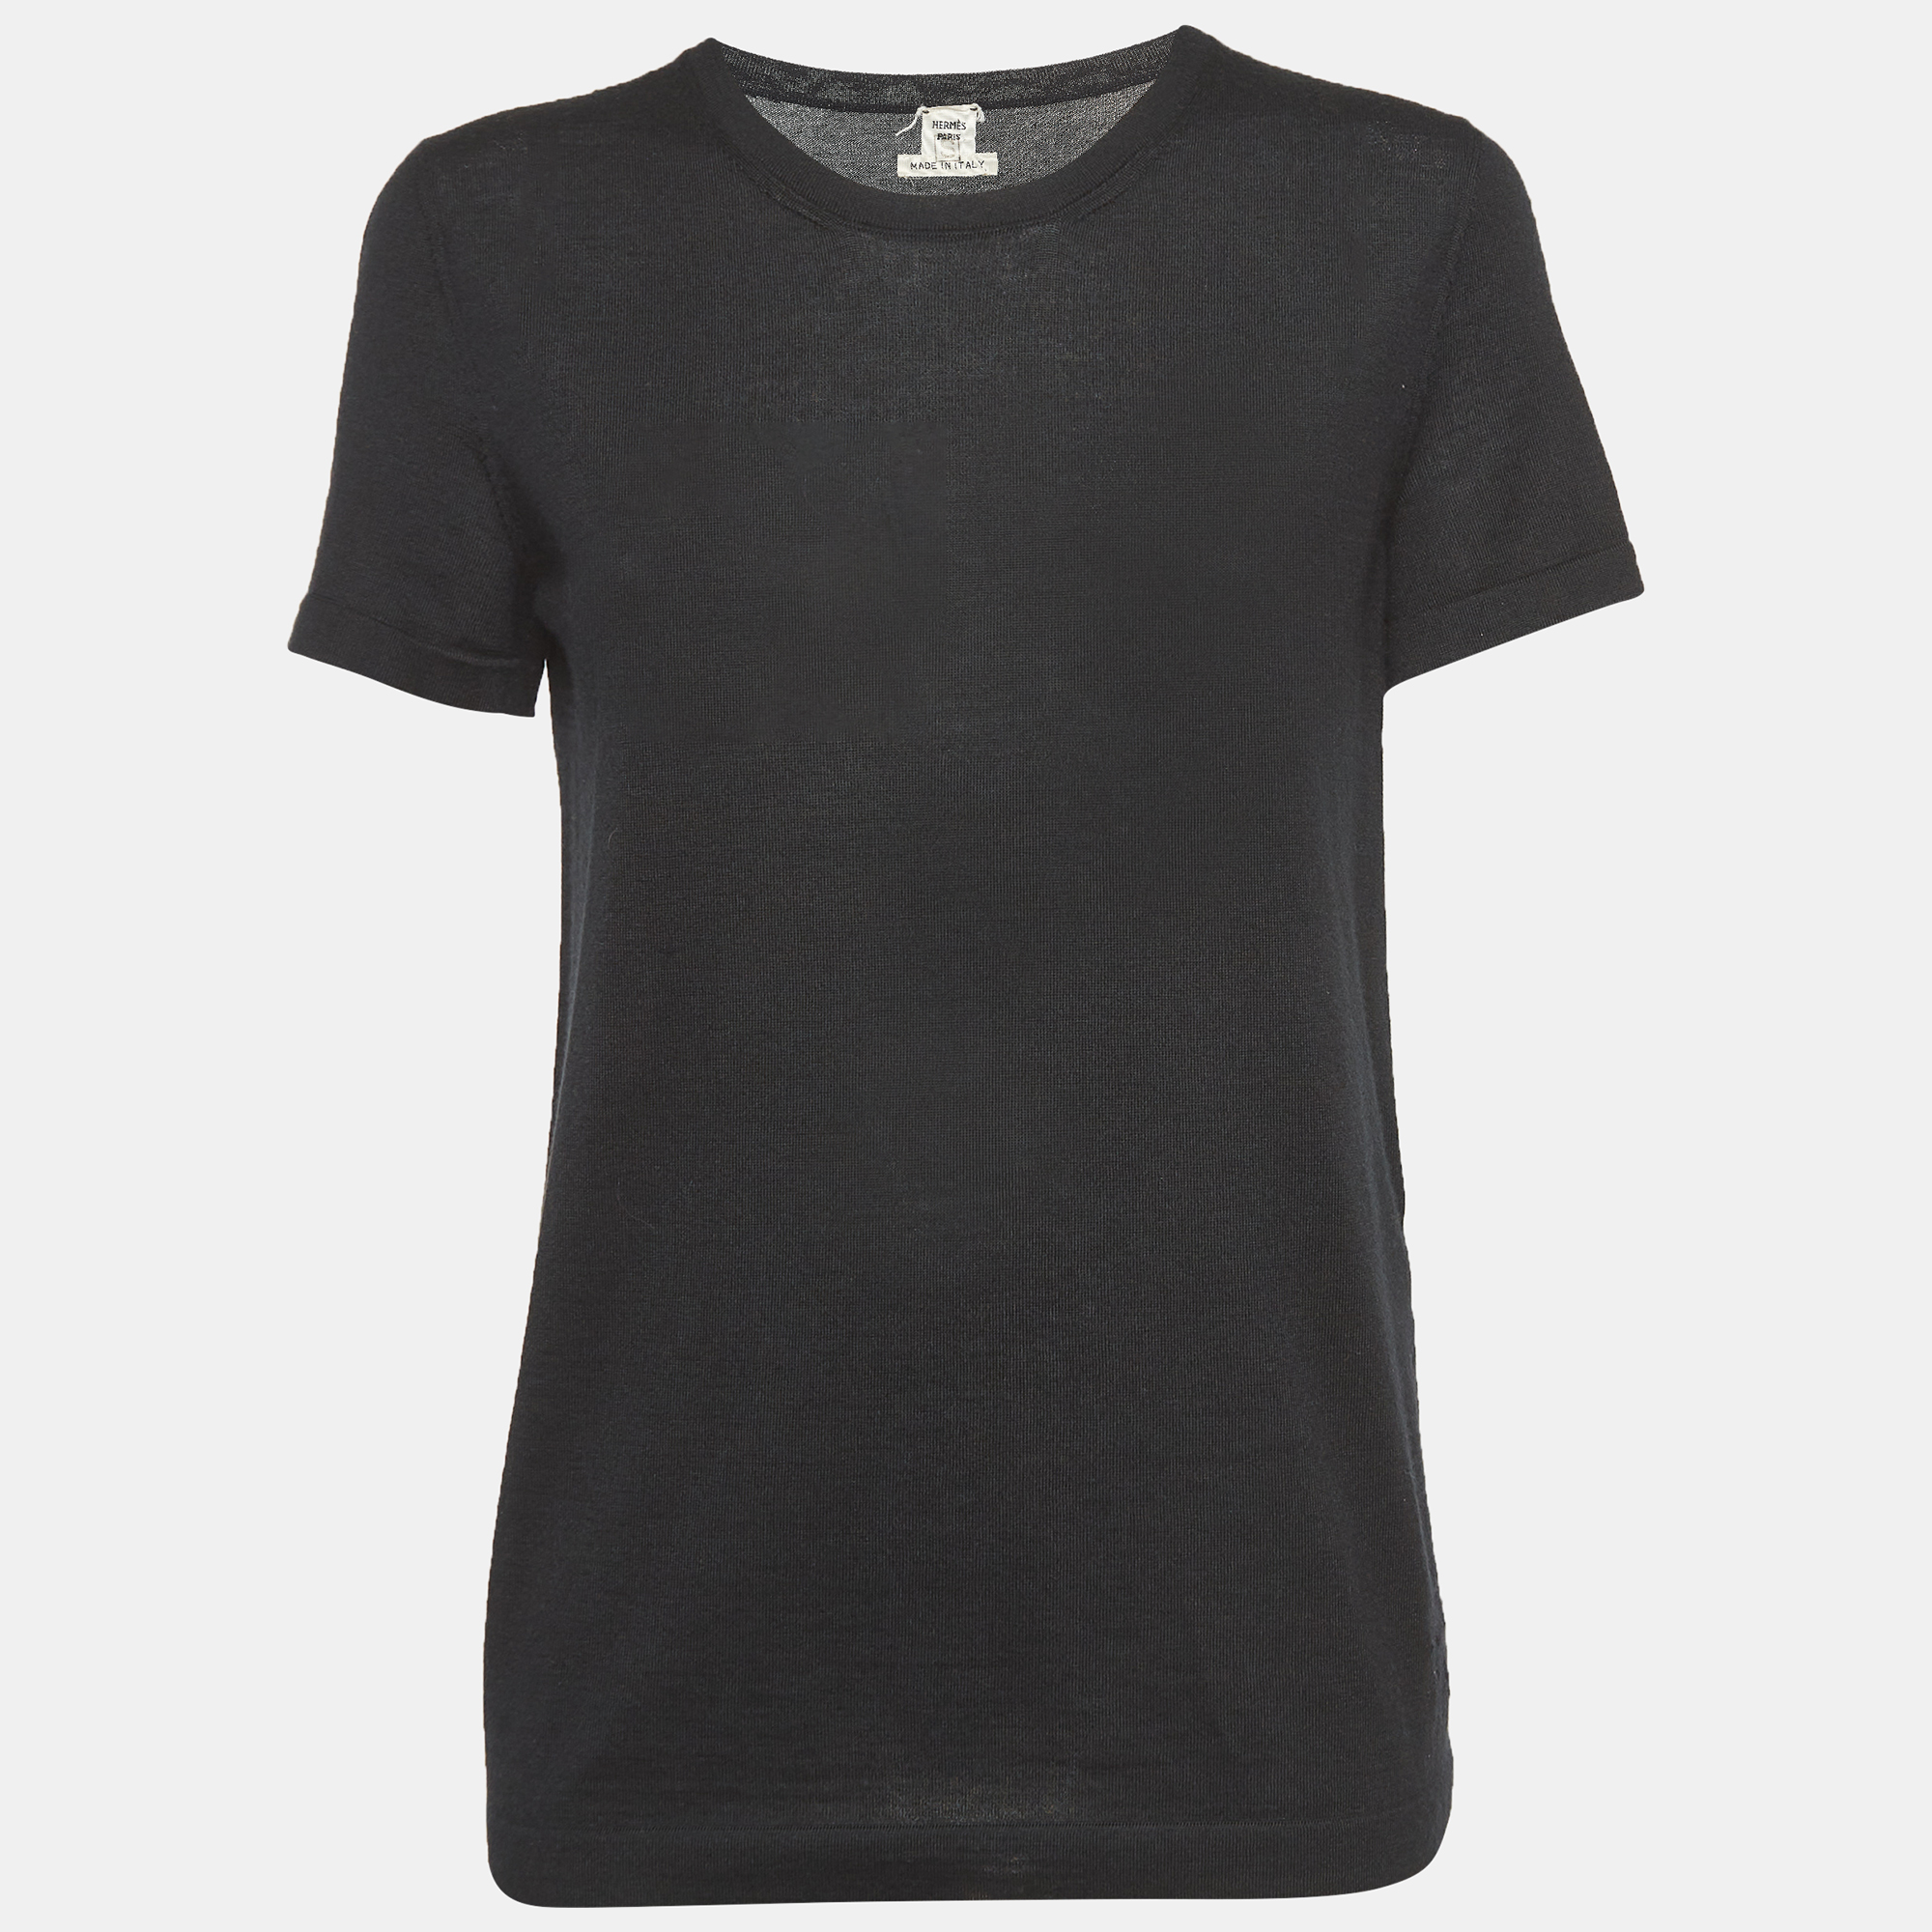 Hermes Black Cashmere Knit Half Sleeve T-Shirt M